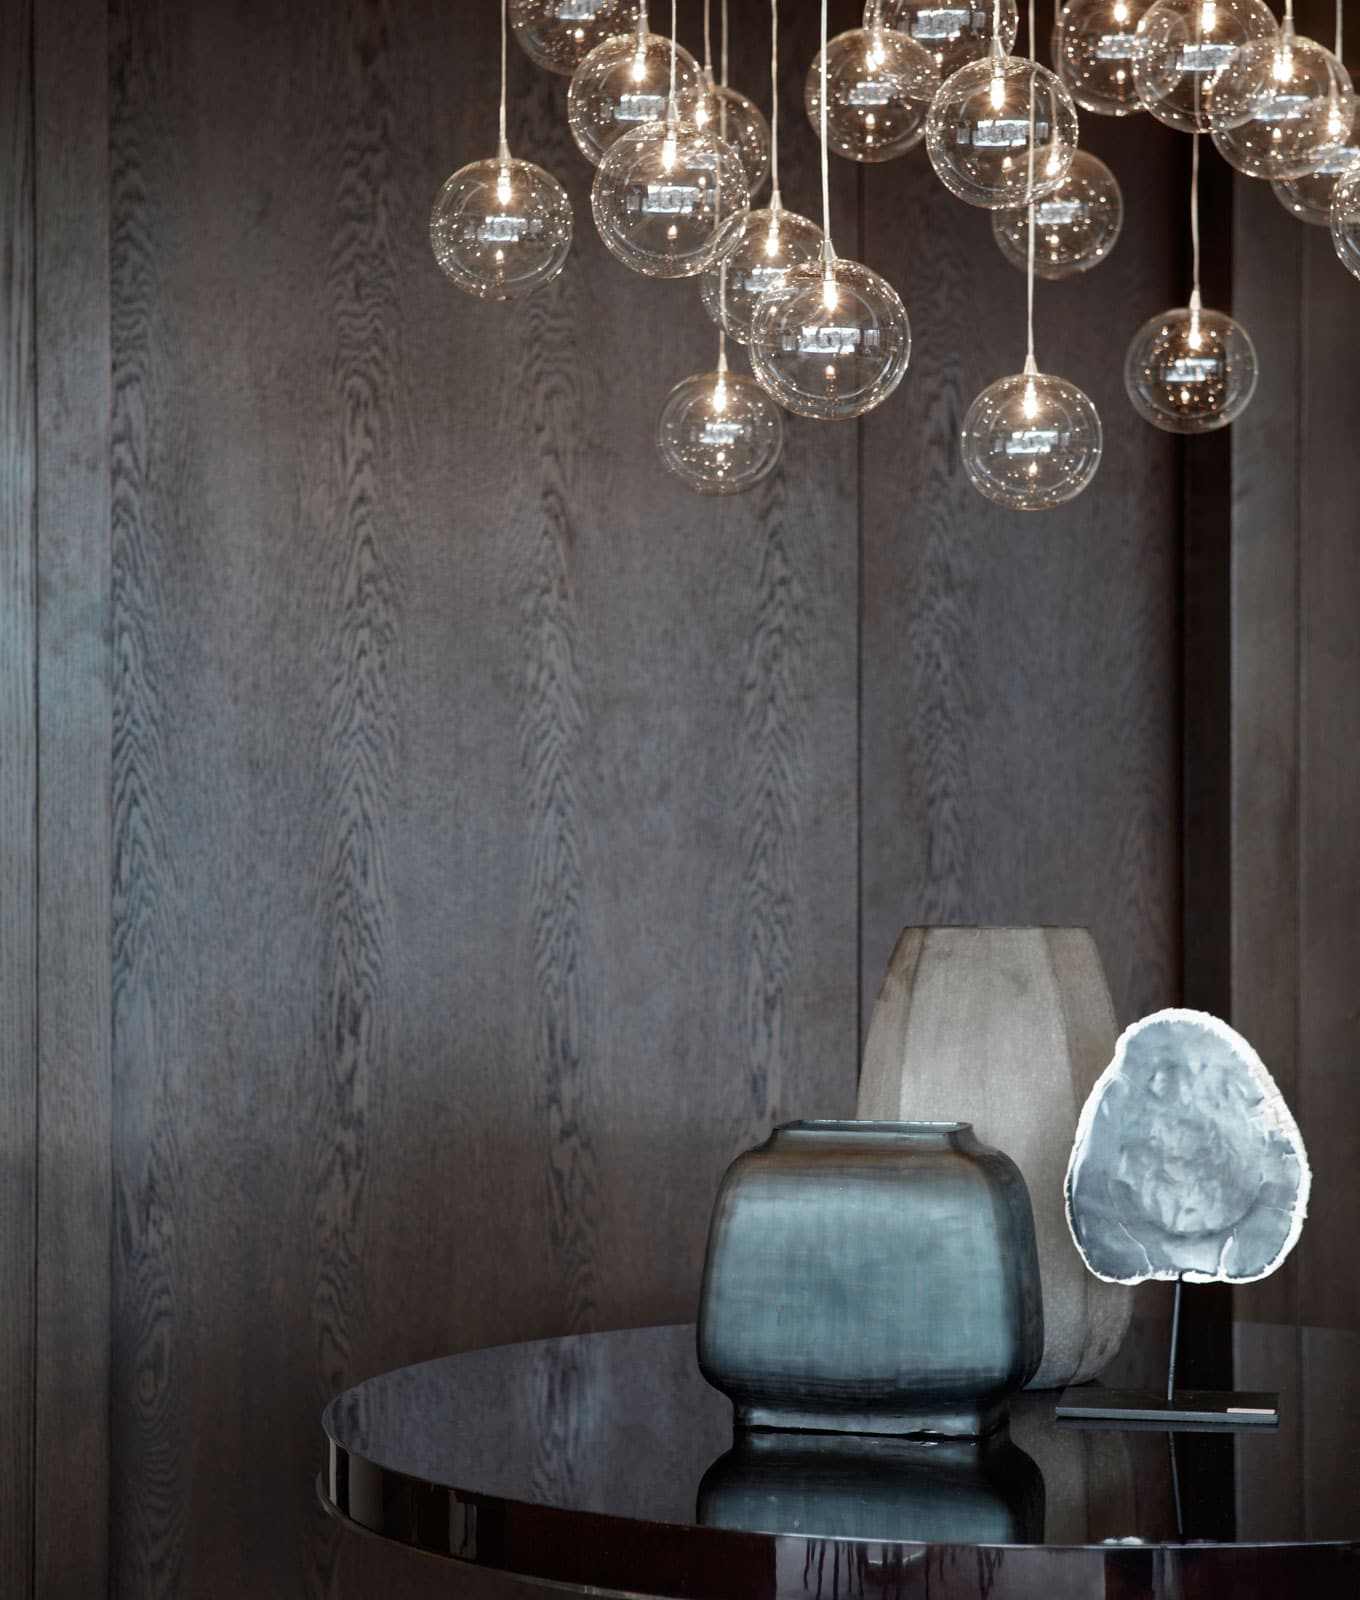 luxury interior design tabletop decorations and bespoke lighting